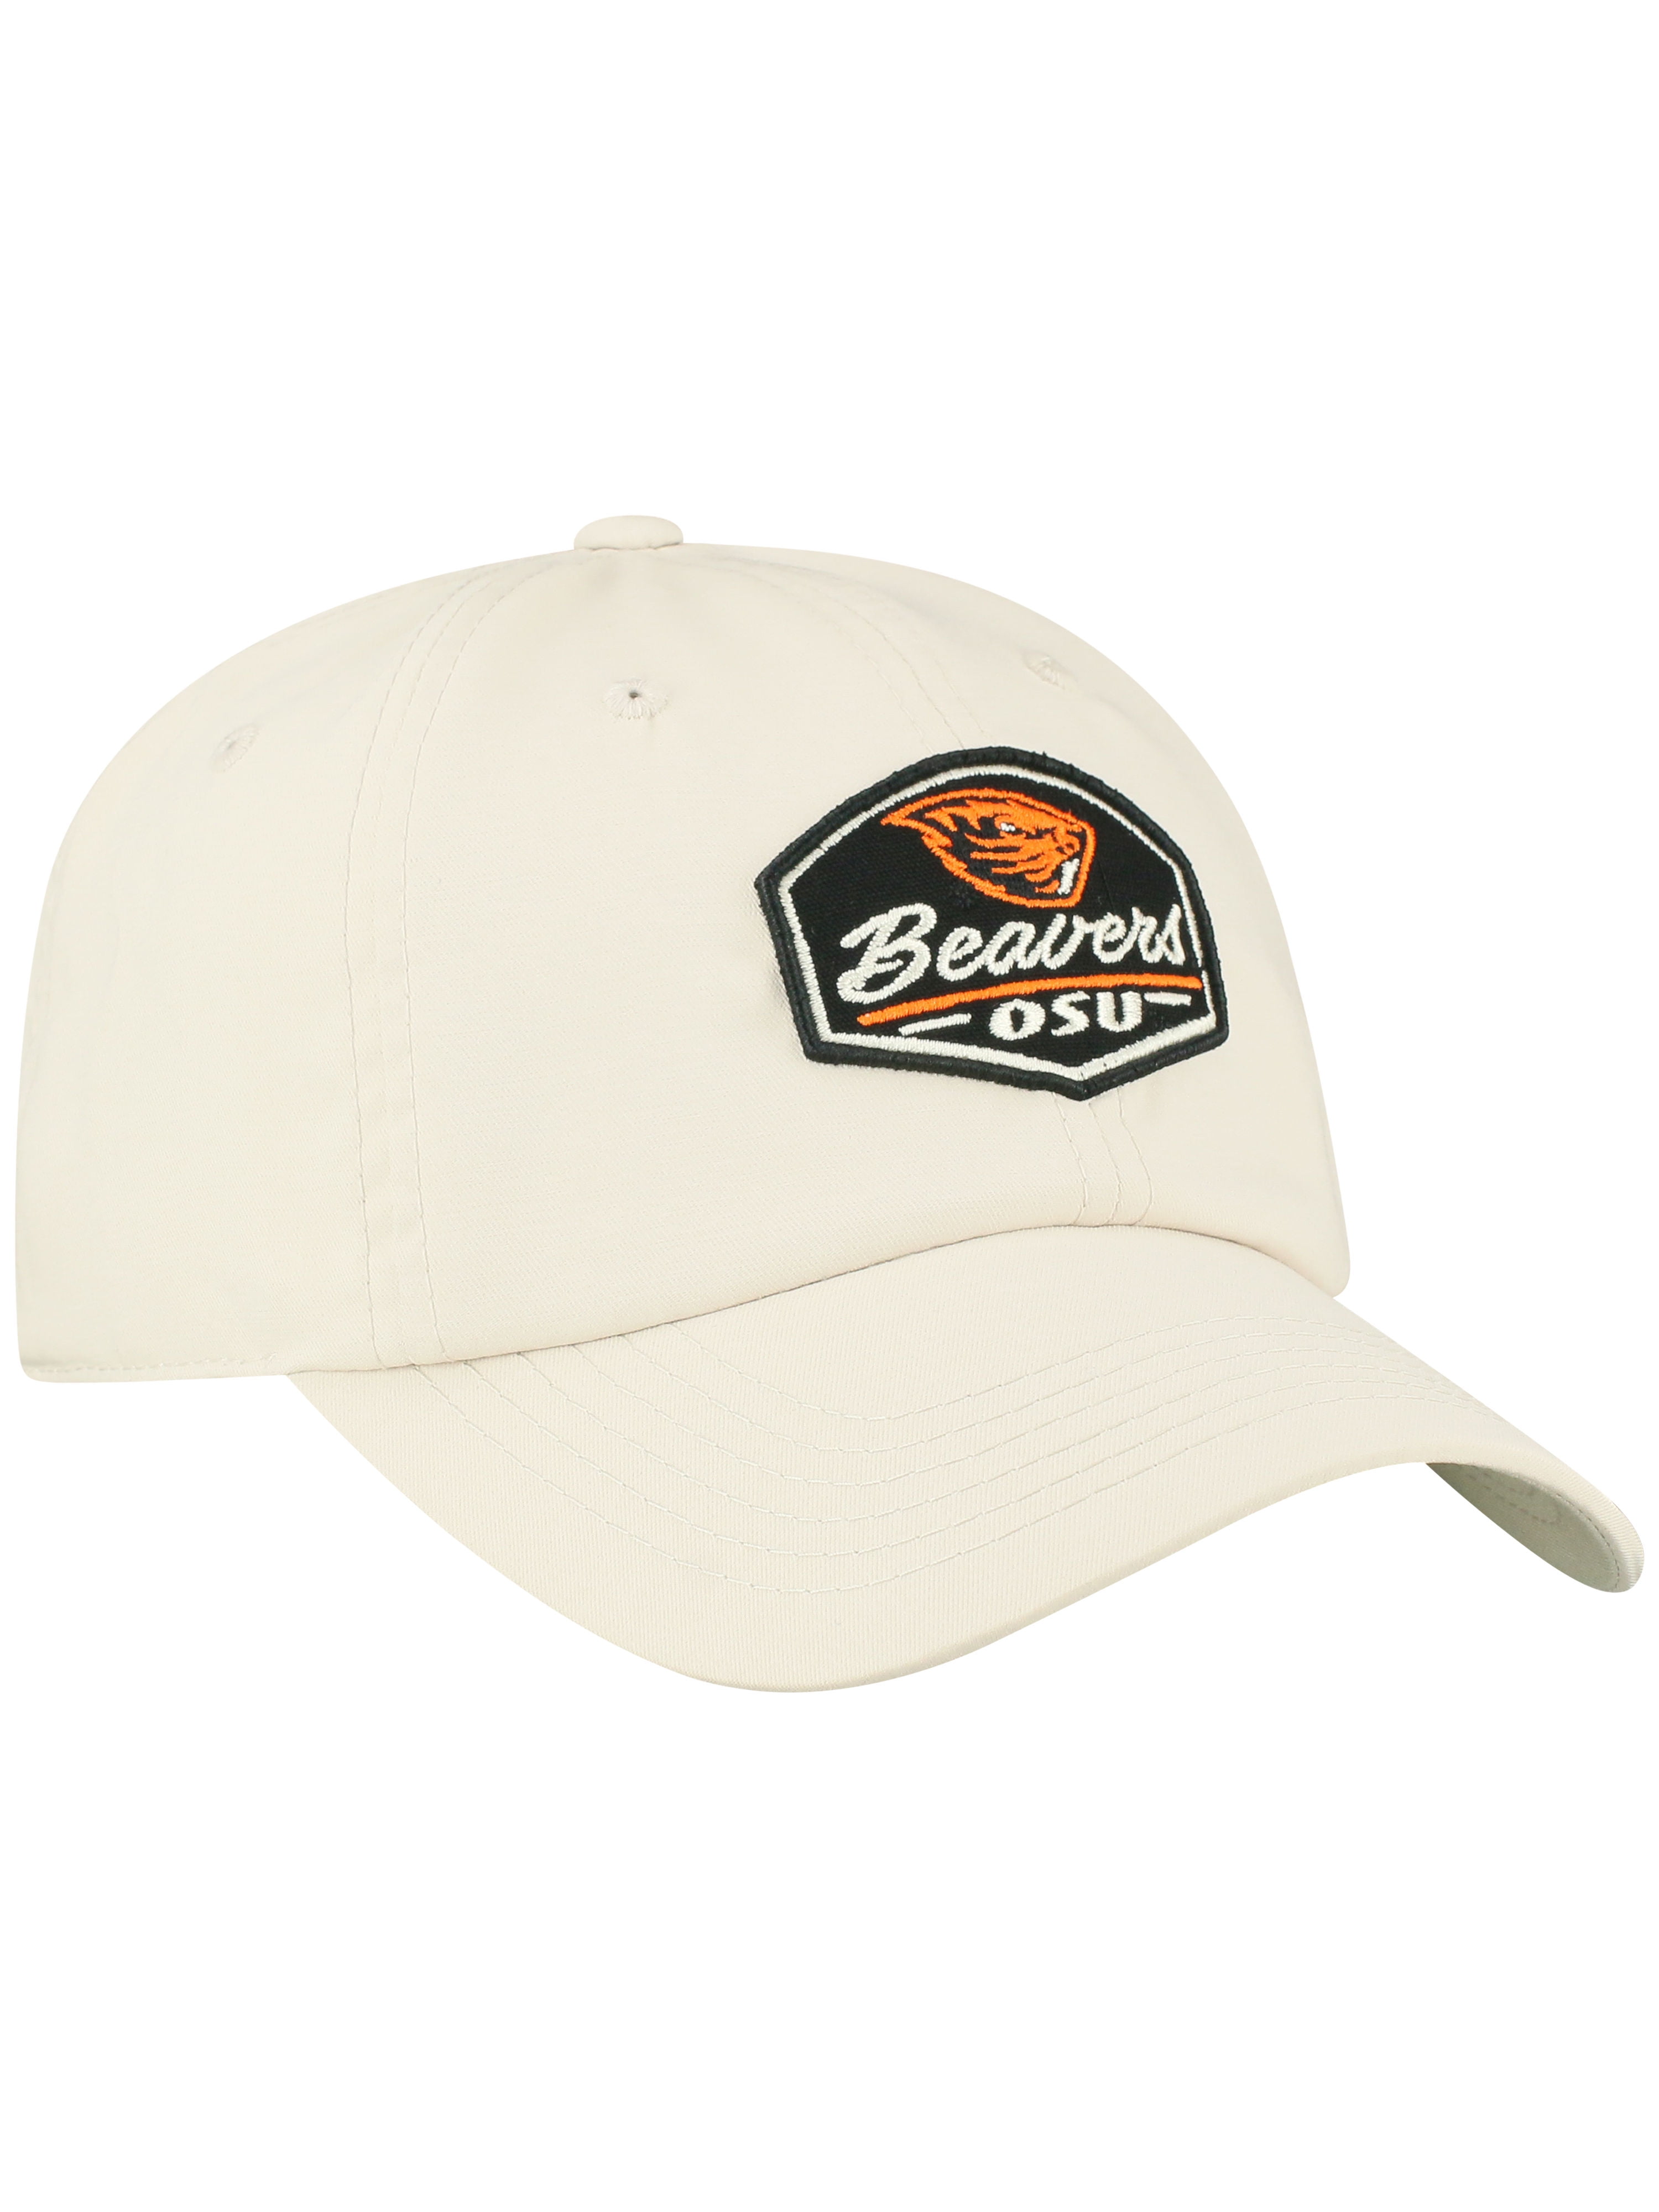 State of Oregon Kids Girls Mesh Trucker Hats Adjustable Baseball Caps